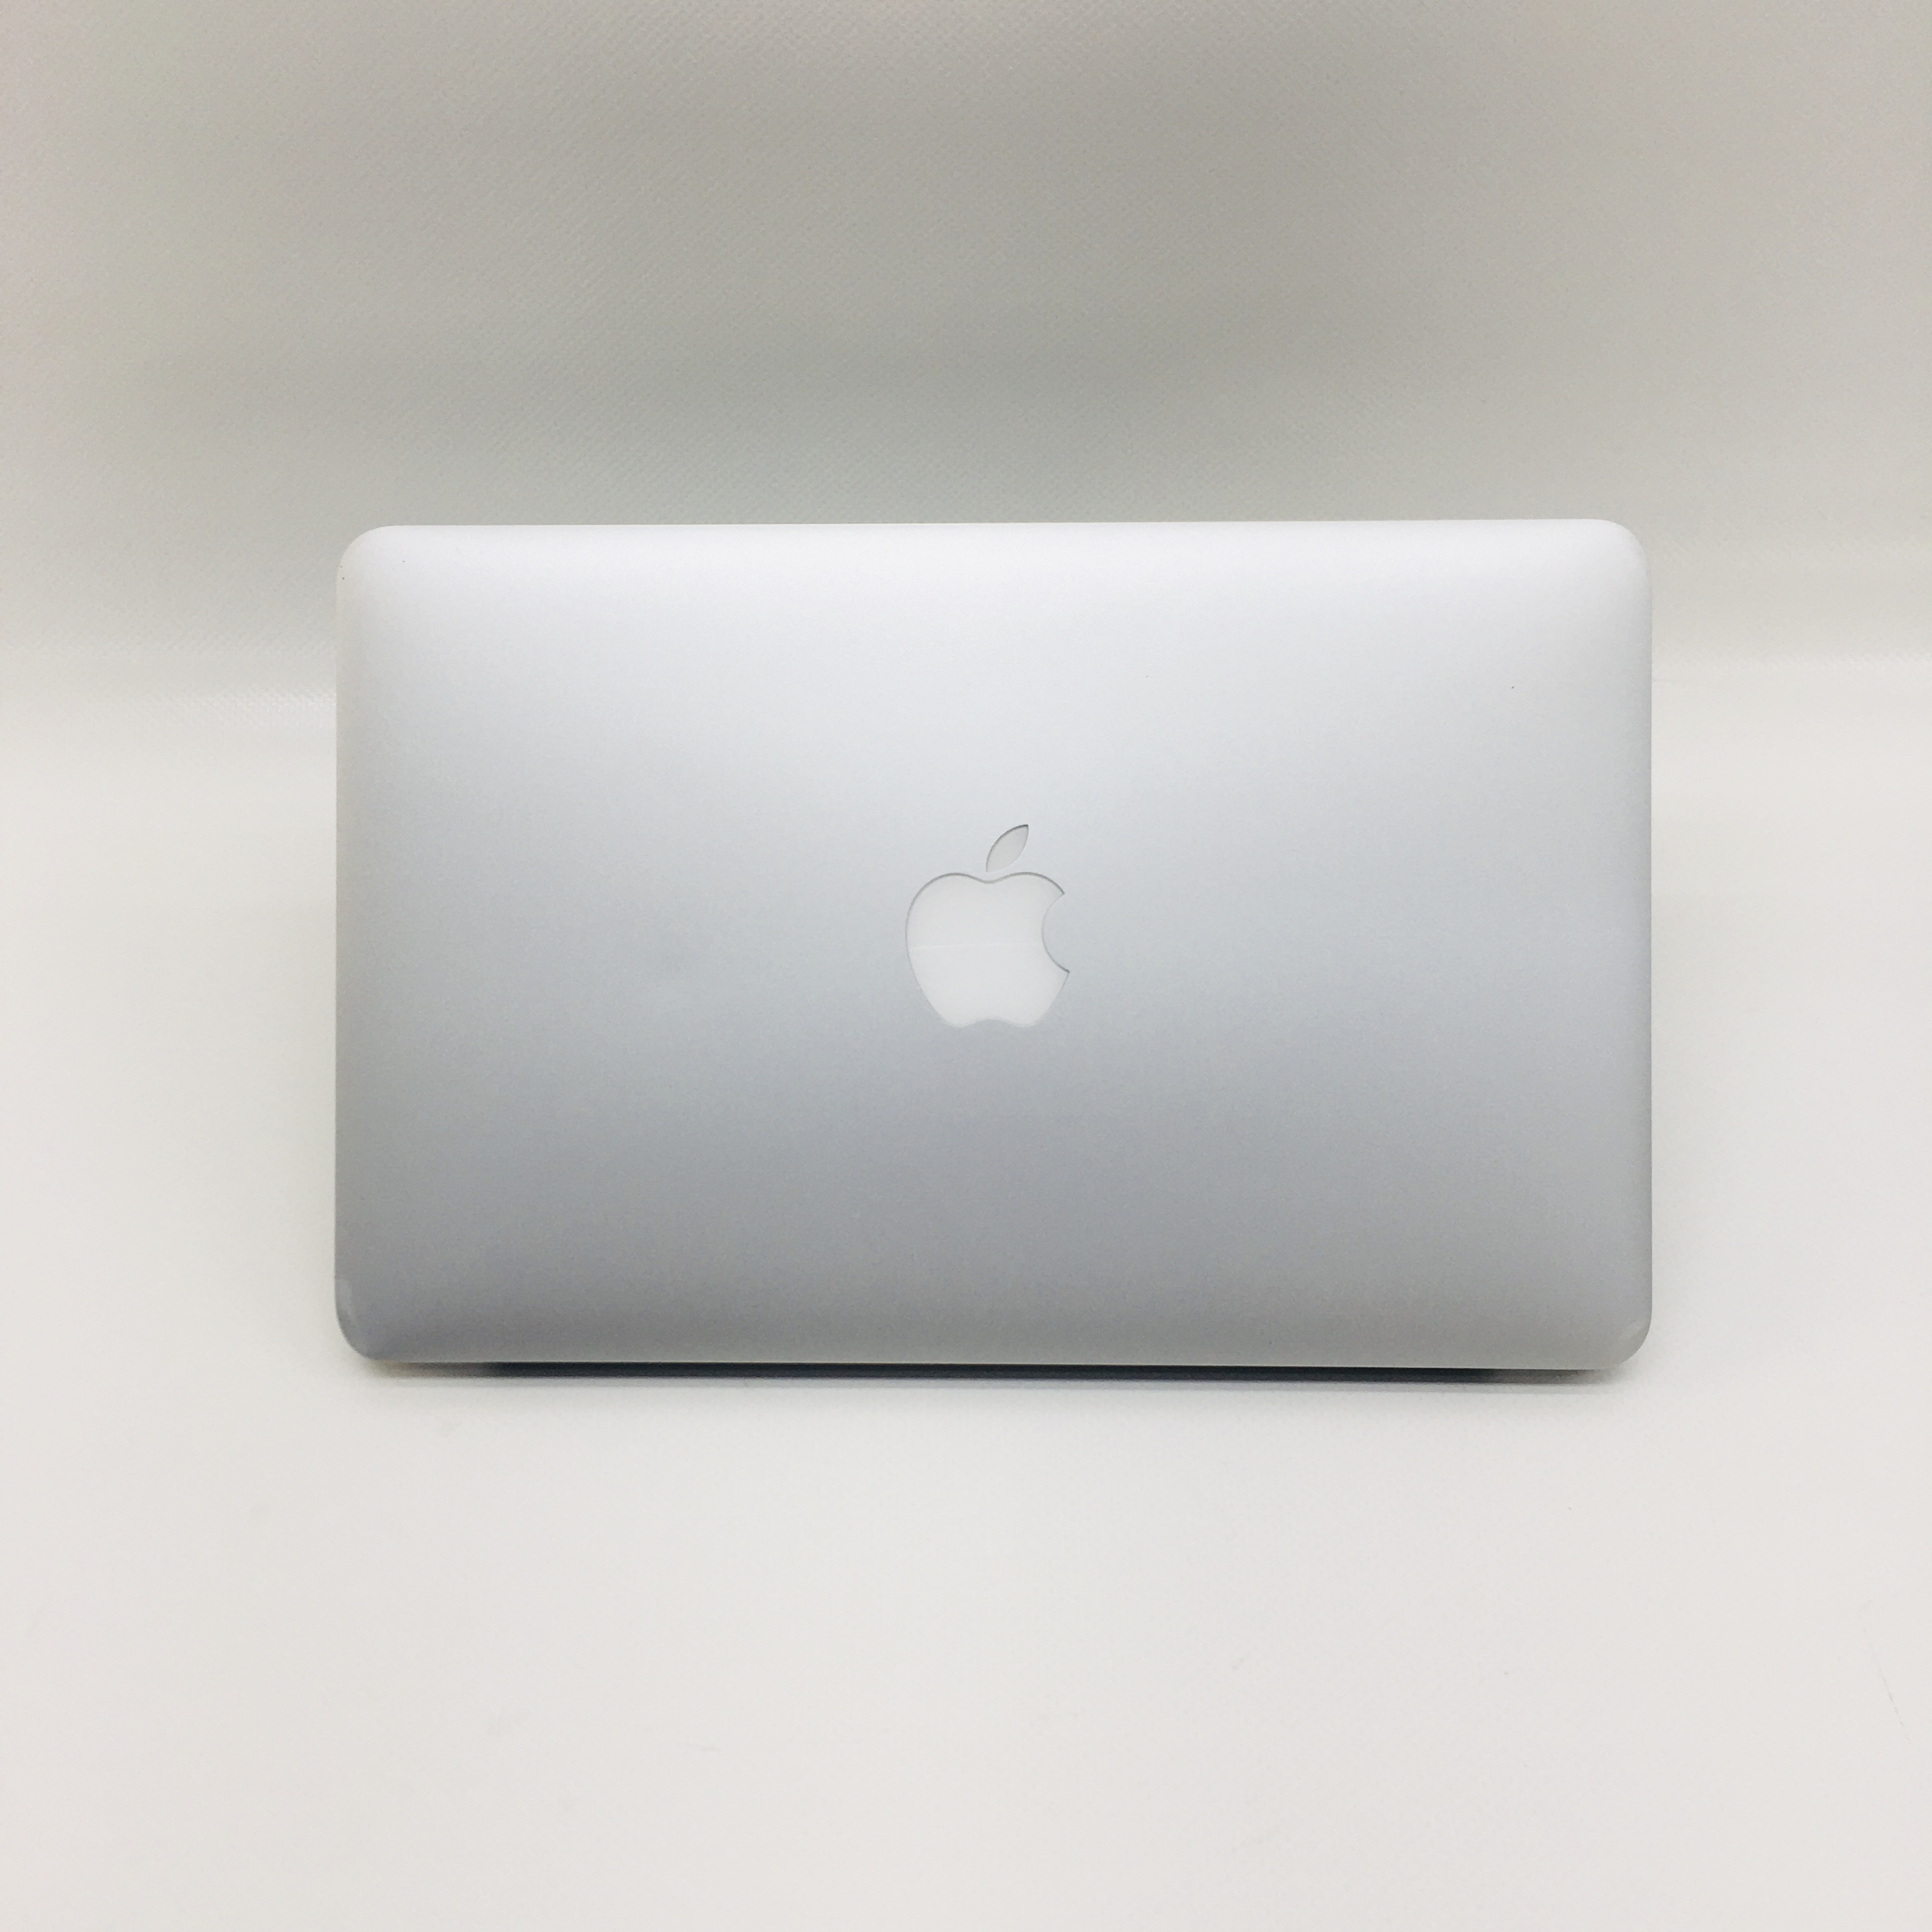 MacBook Air 11" Early 2015 (Intel Core i5 1.6 GHz 4 GB RAM 256 GB SSD), Intel Core i5 1.6 GHz, 4 GB RAM, 256 GB SSD, image 2